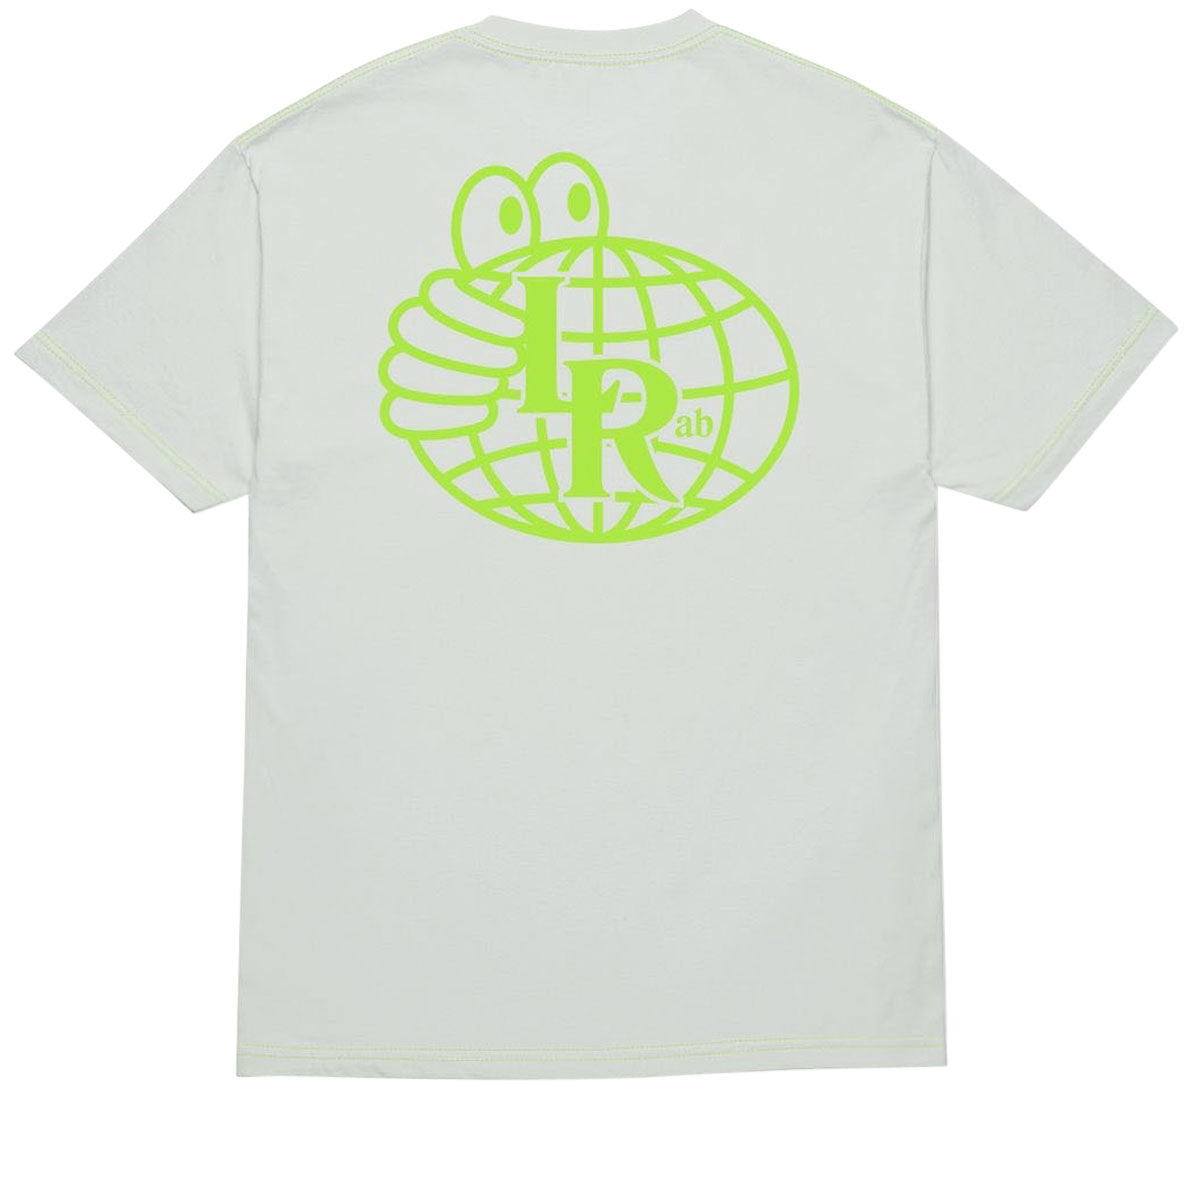 Last Resort AB Atlas Monogram T-Shirt - Green Tint/Neon image 1